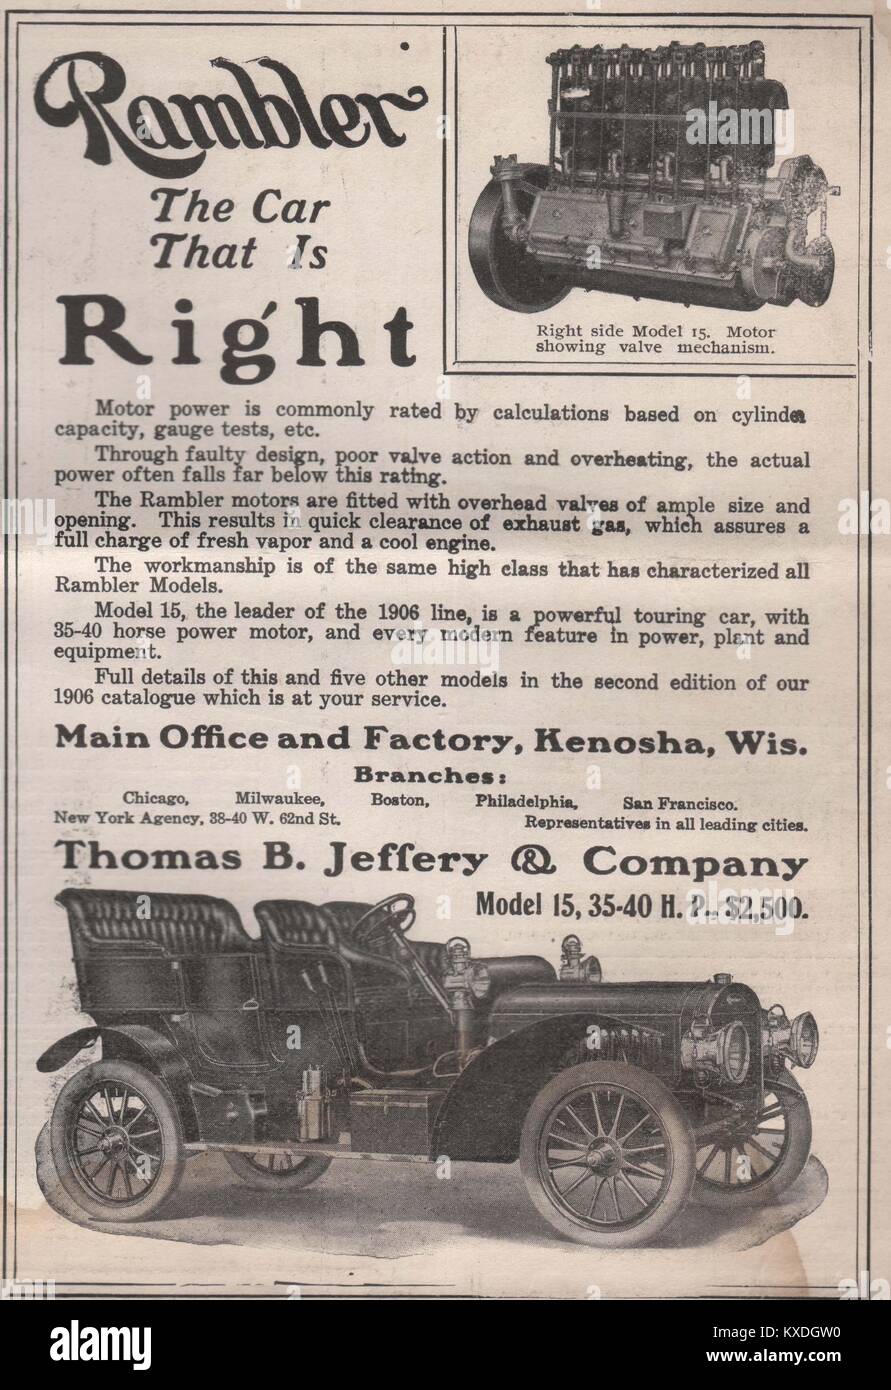 "Rambler das Auto, das ist richtig" Thomas B. Jeffery & Unternehmen - Kenosha, Wis Stockfoto